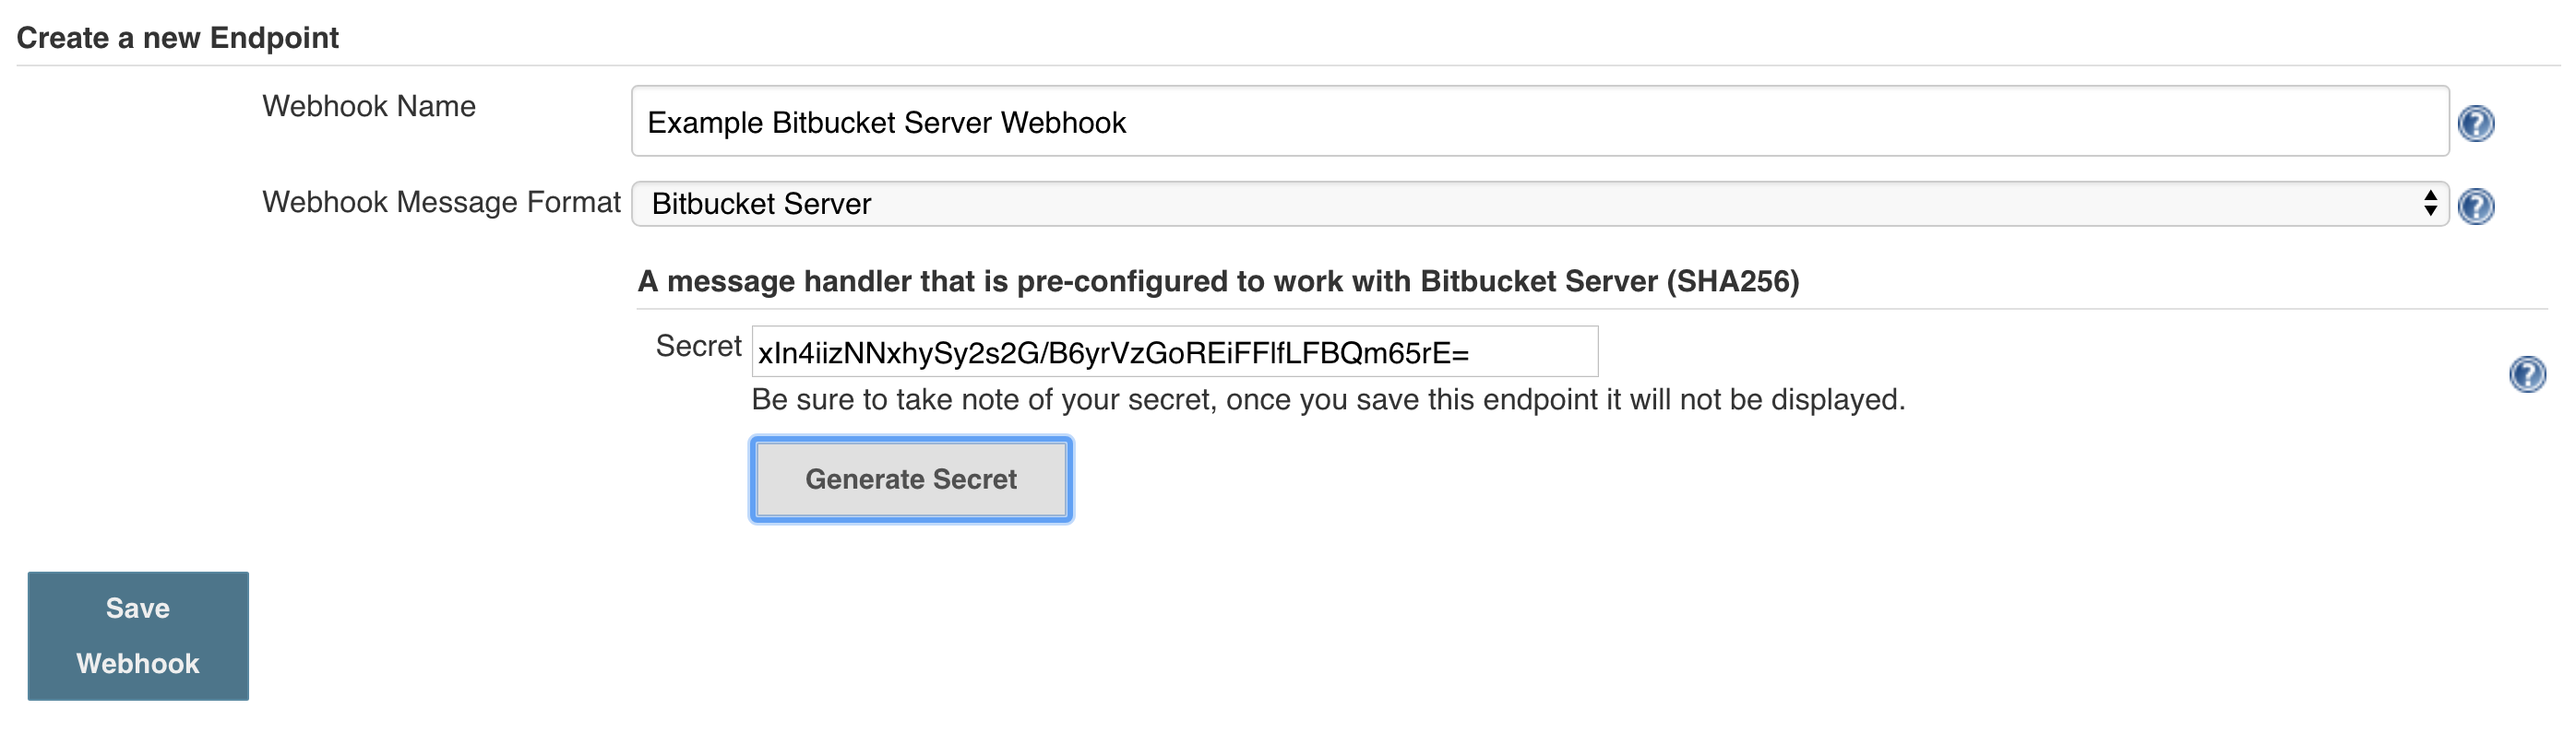 bitbucket server webhook config